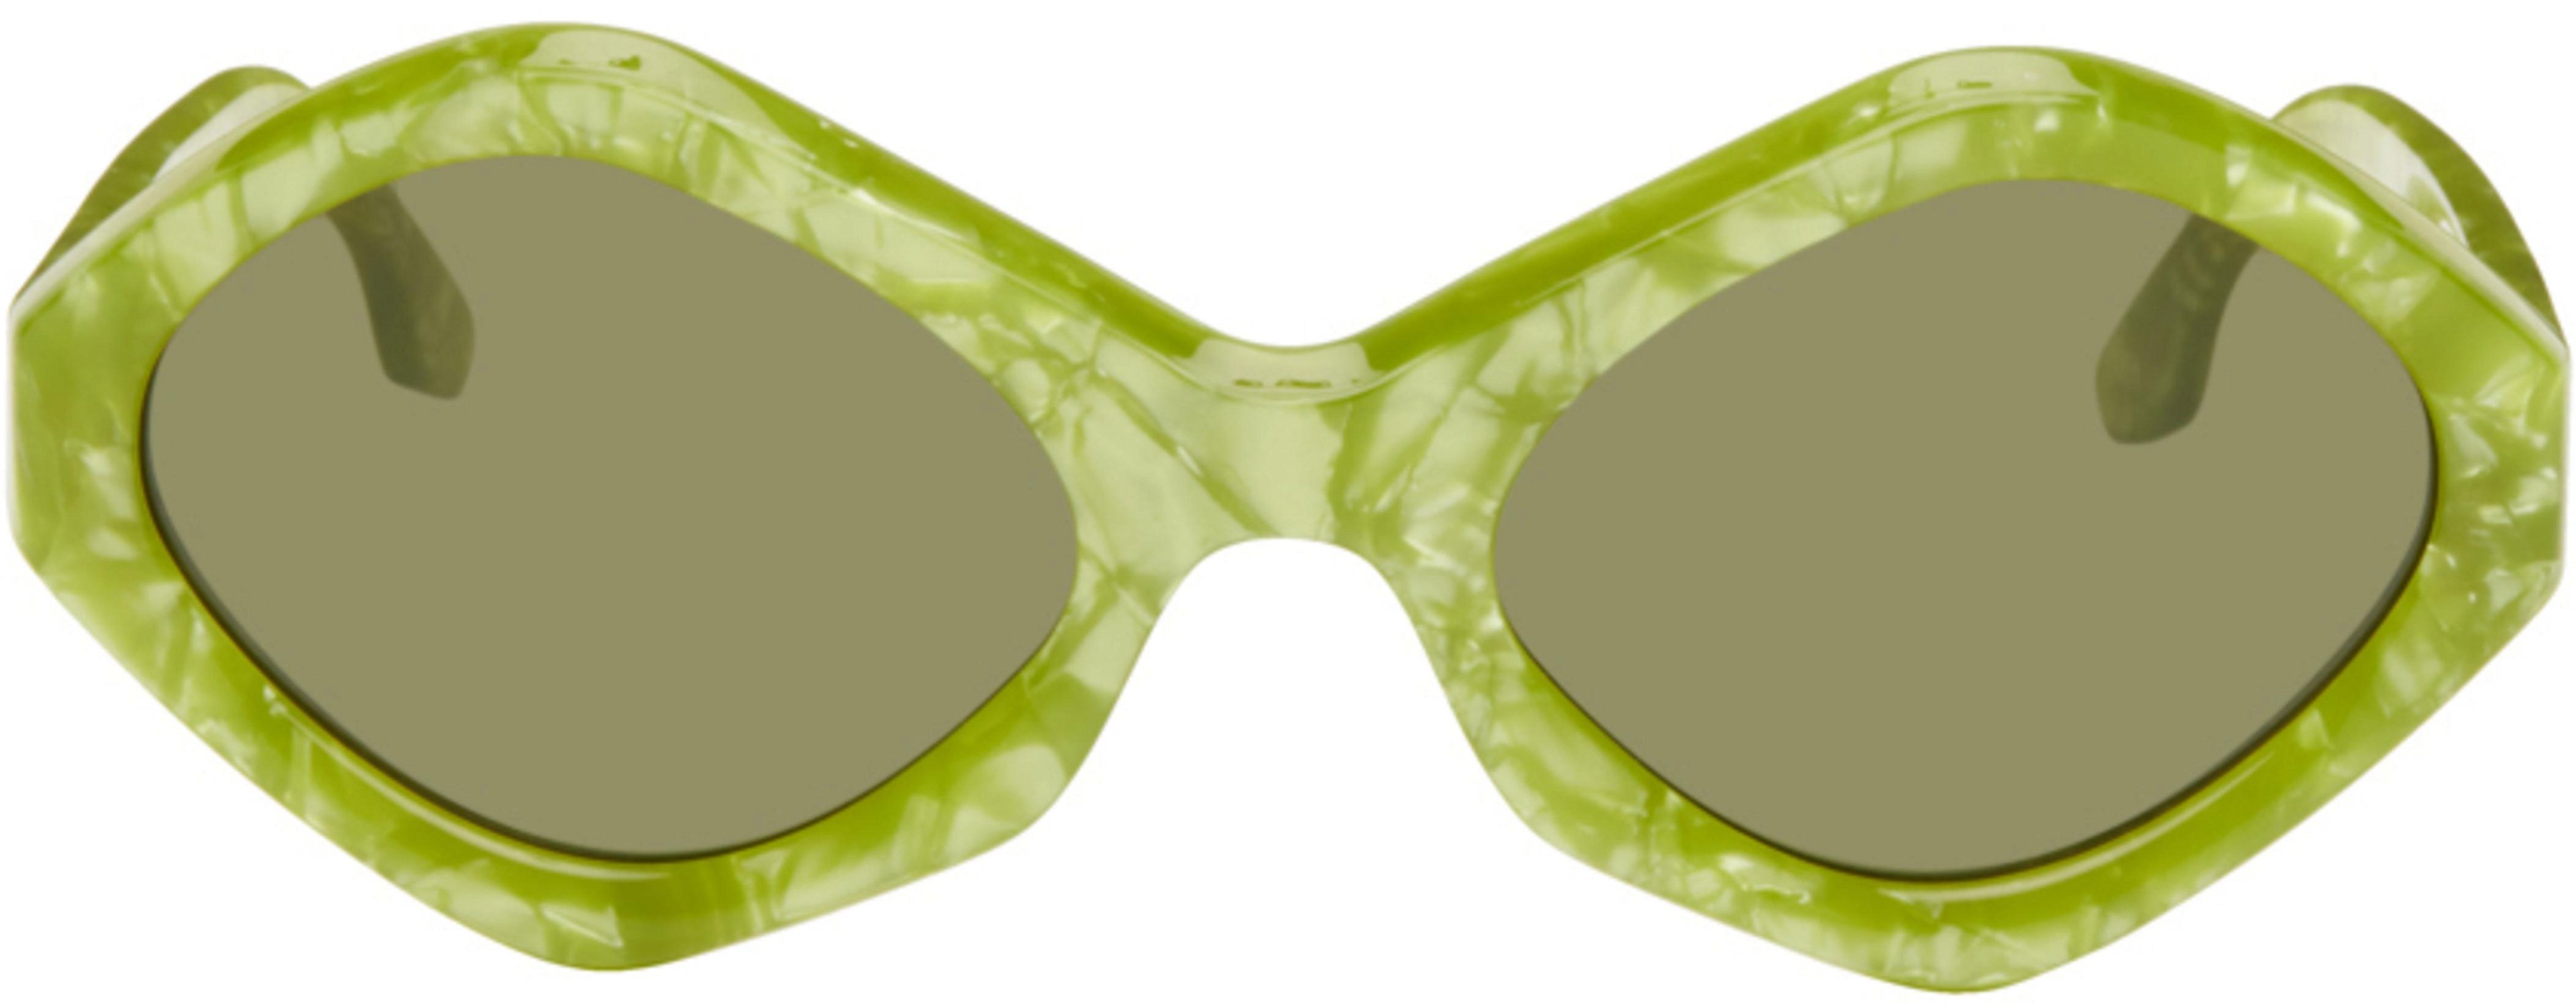 Green Octavia Sunglasses by KIKO KOSTADINOV